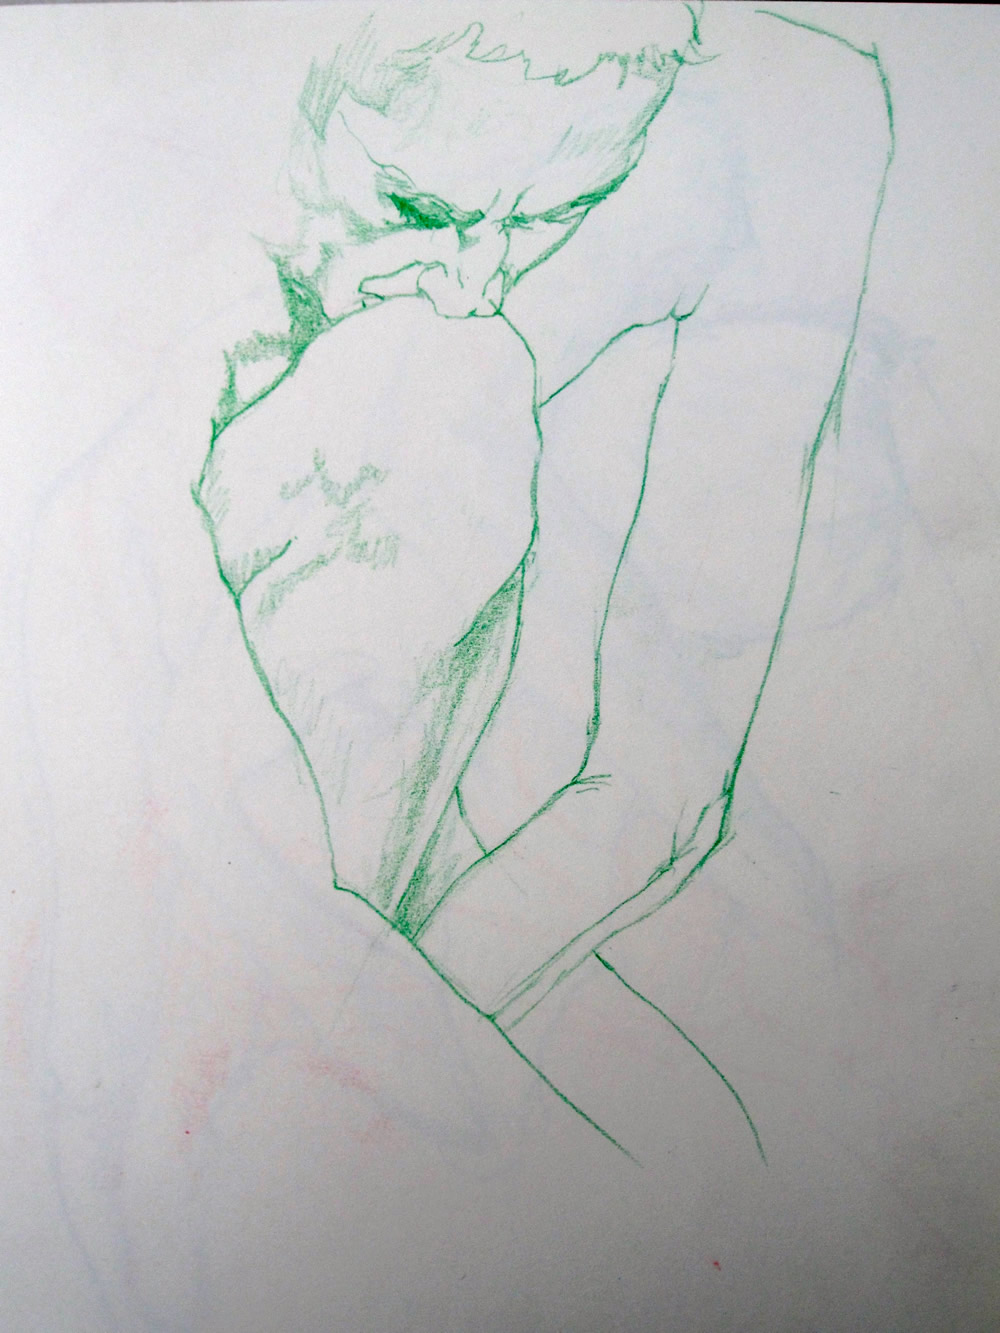 Chrissy Thirlaway, Life 2 series 9, Pencil on paper, 25x32cm